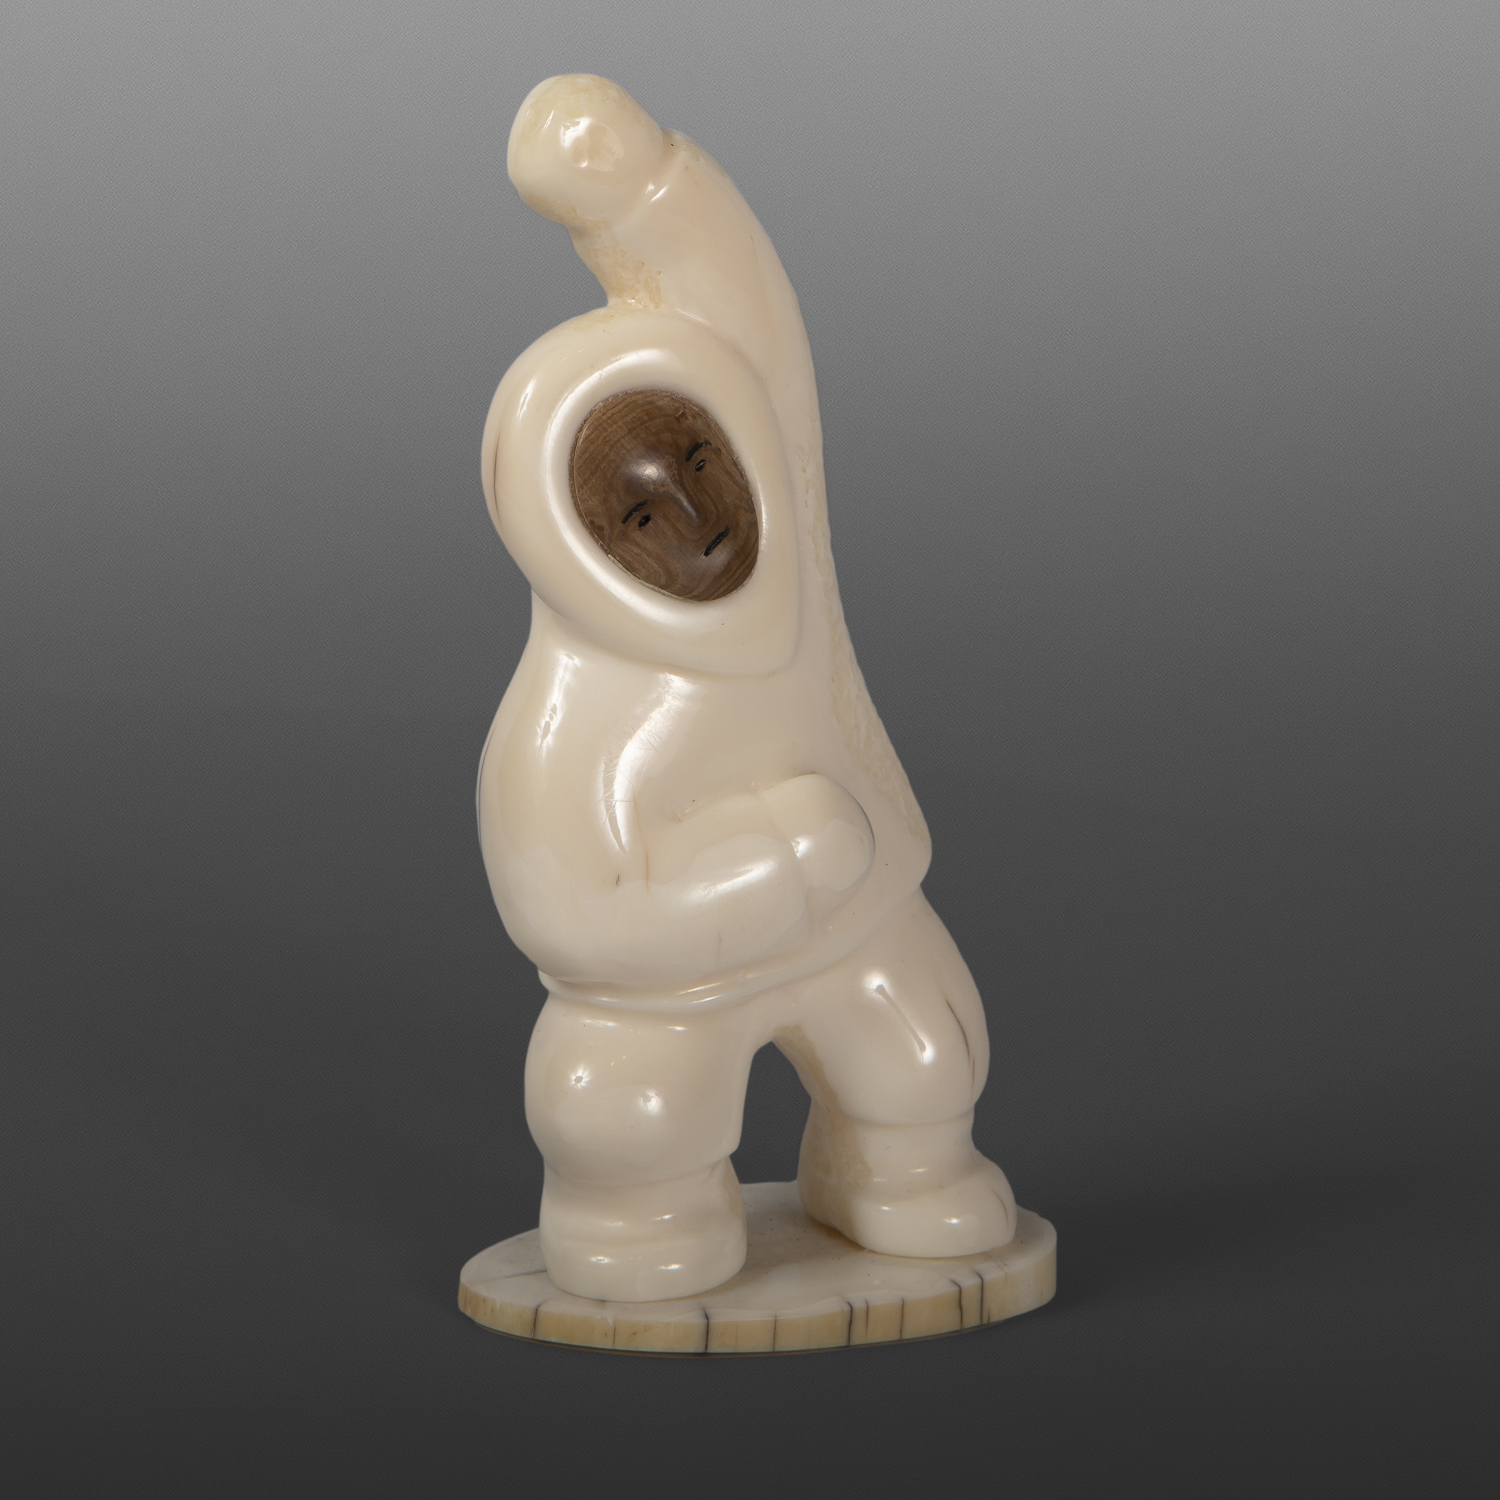 Dancing Figurine
John Sinnok
Inupiaq
Ivory, mammoth tusk, ink
4½" x 2" x 1½"
$500